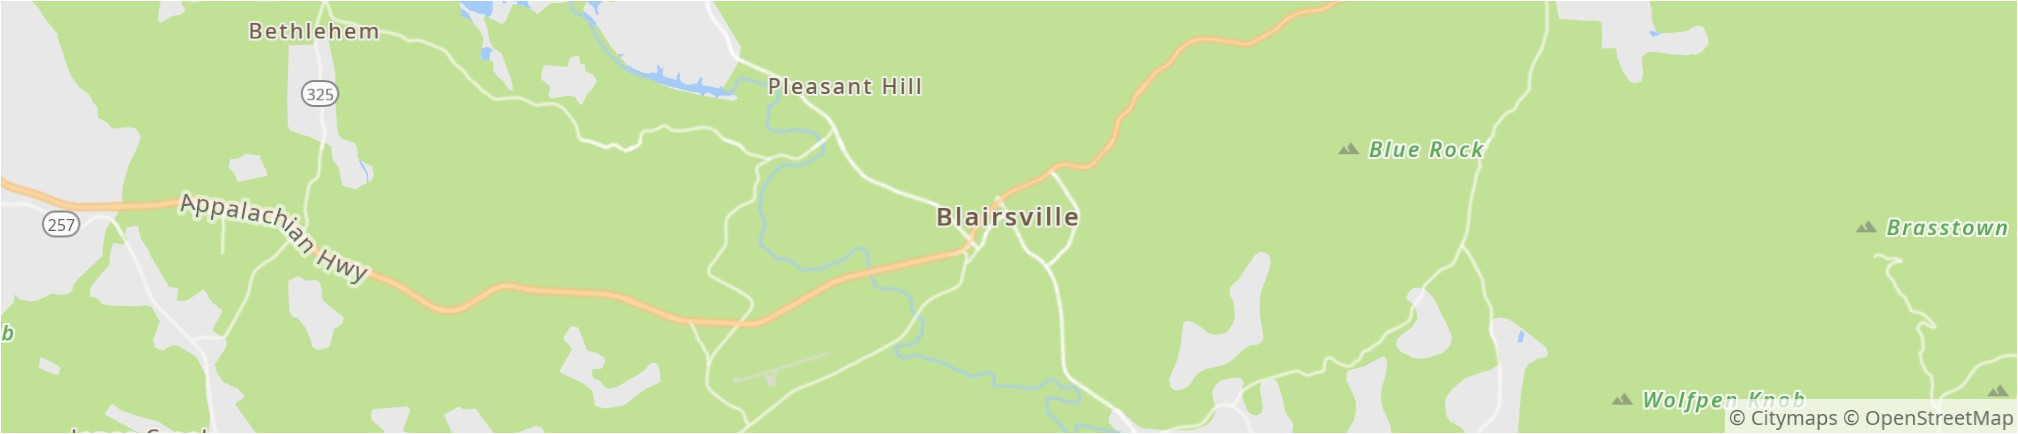 Blairsville Georgia Map Blairsville 2019 Best Of Blairsville Ga tourism Tripadvisor